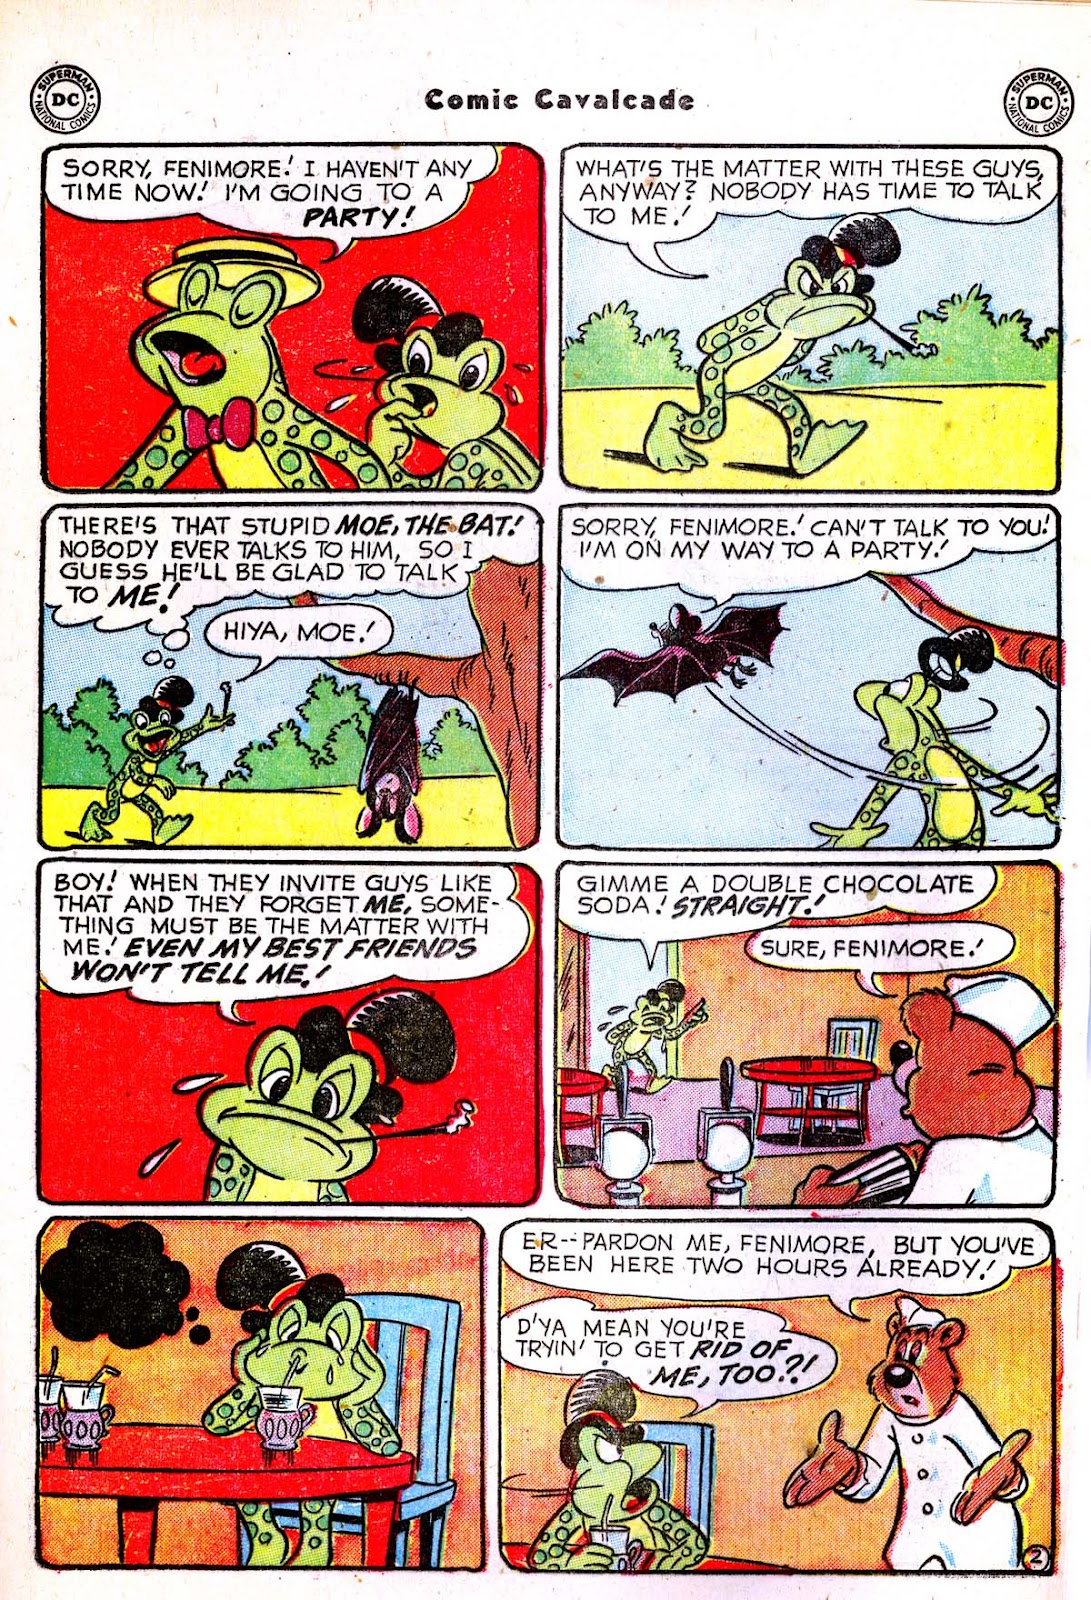 Comic Cavalcade issue 48 - Page 33